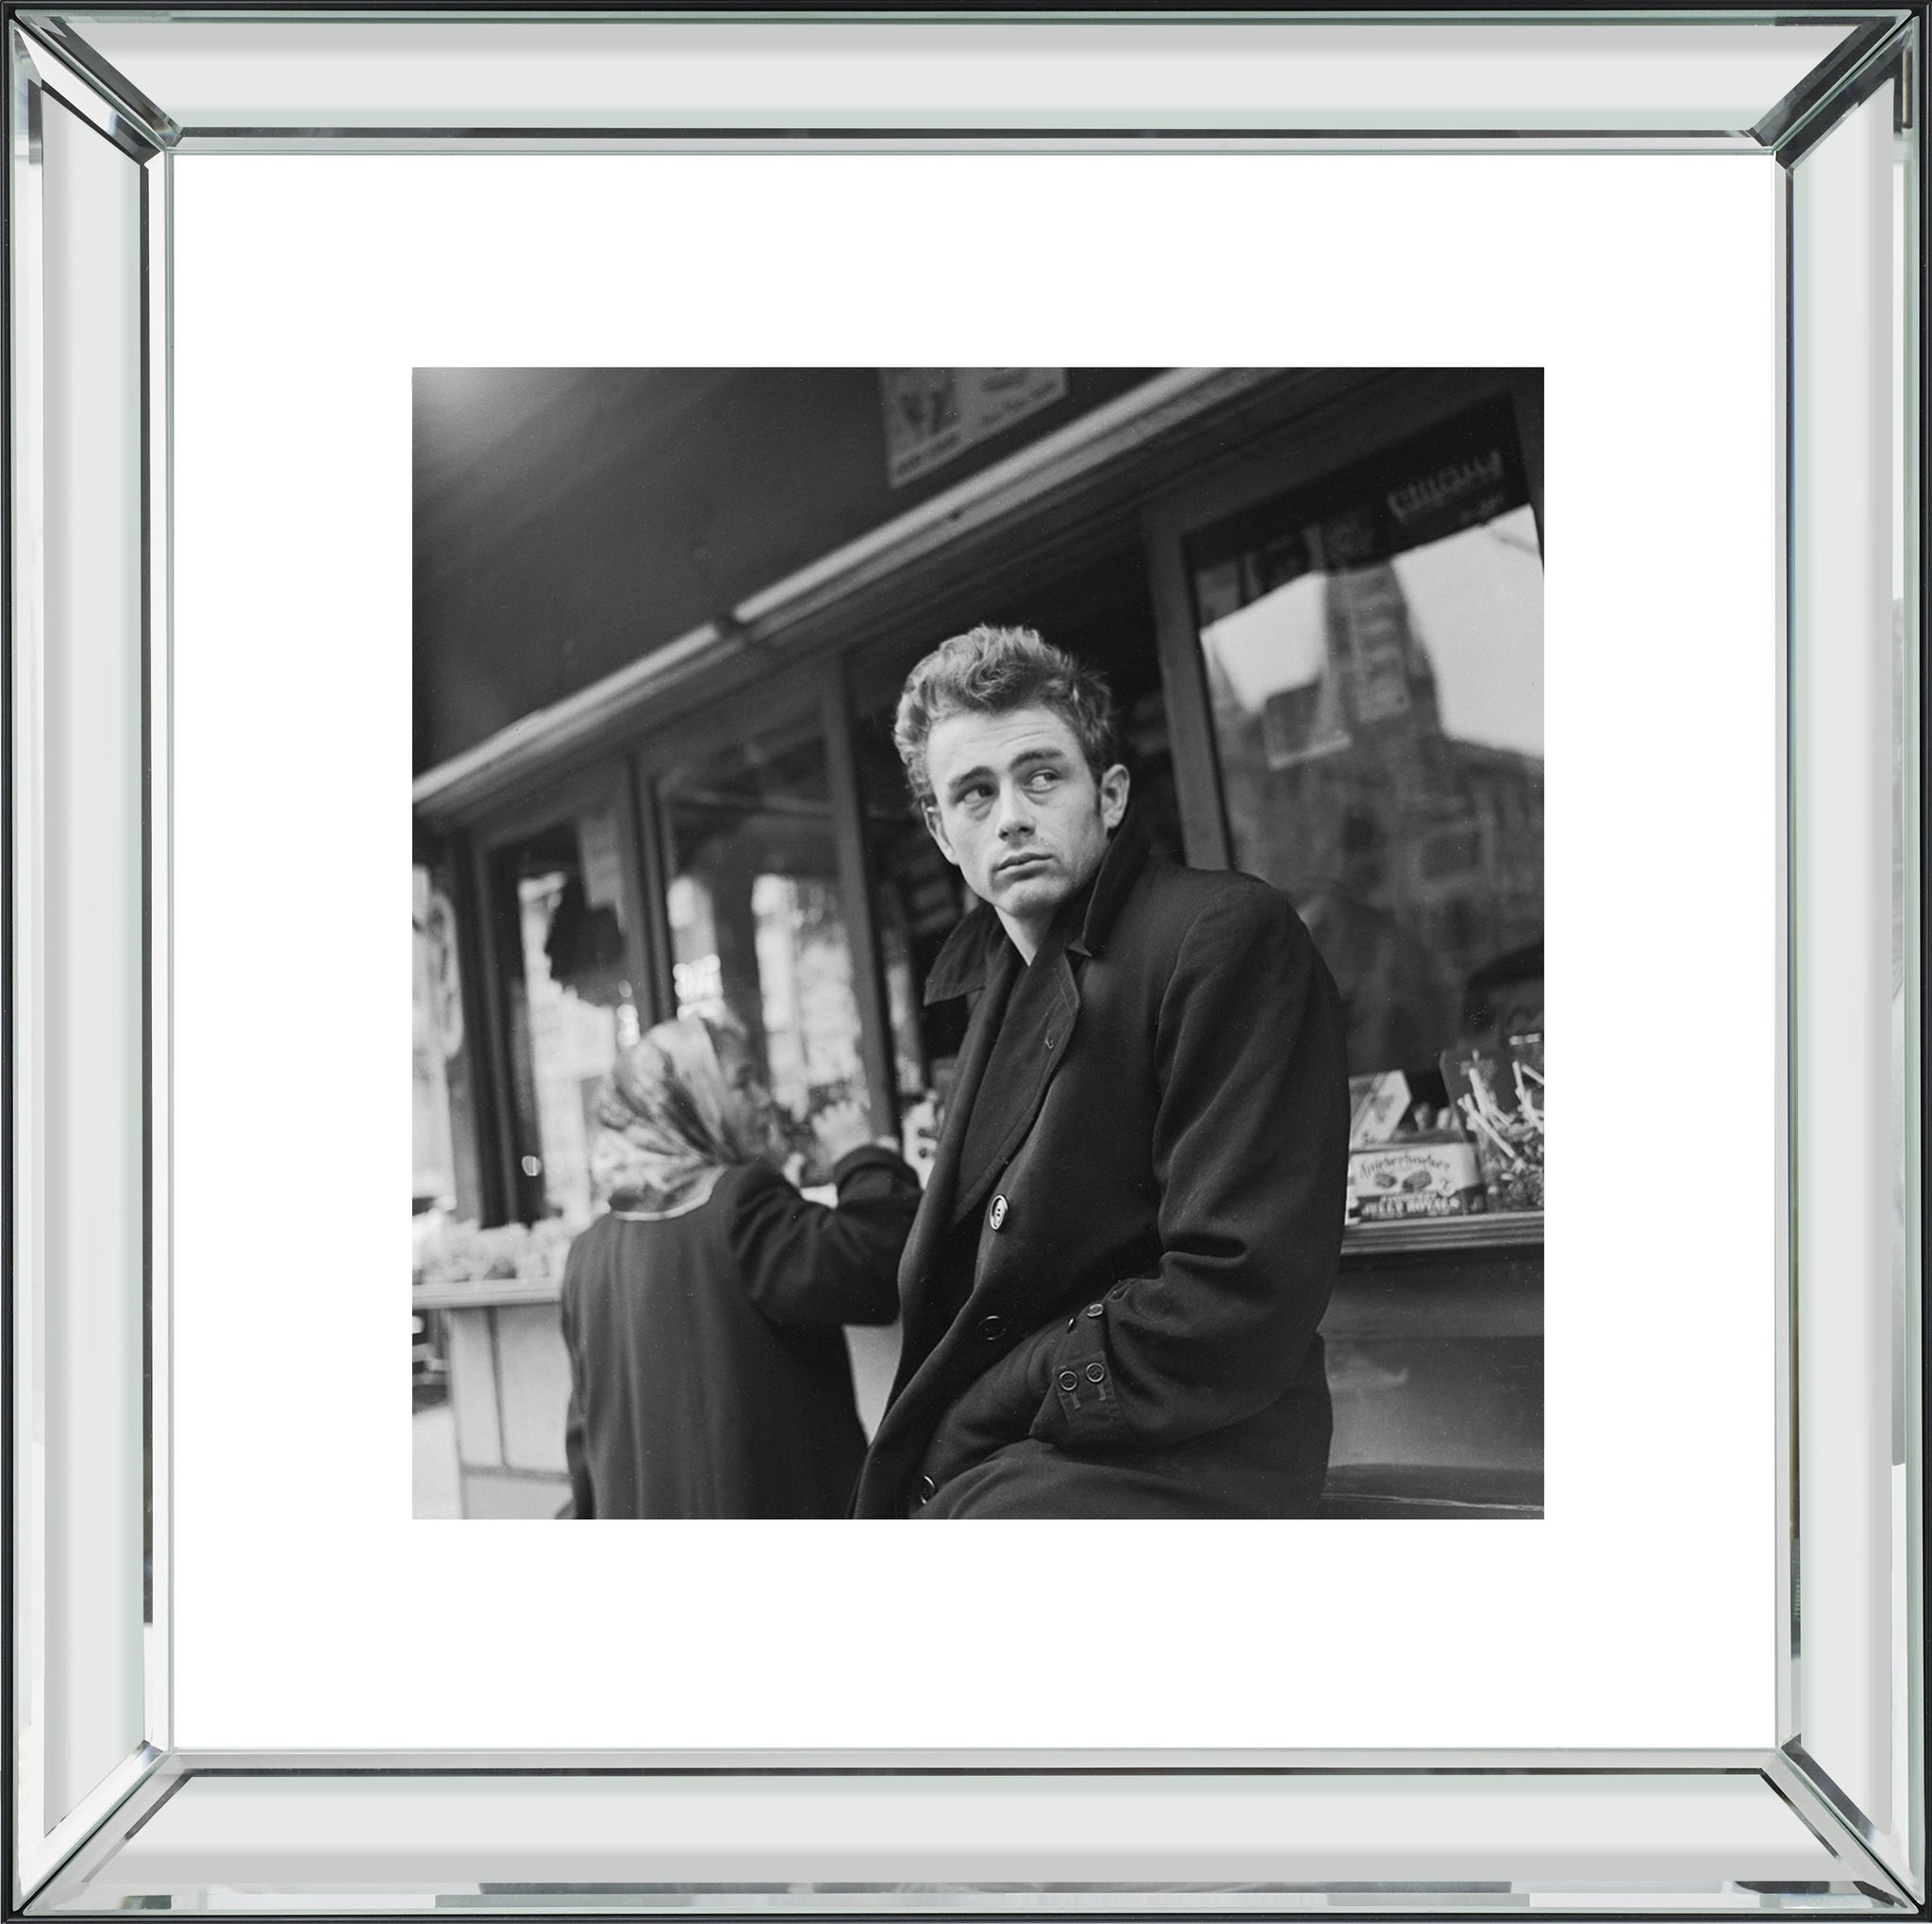 James Dean Mirror Frame Picture